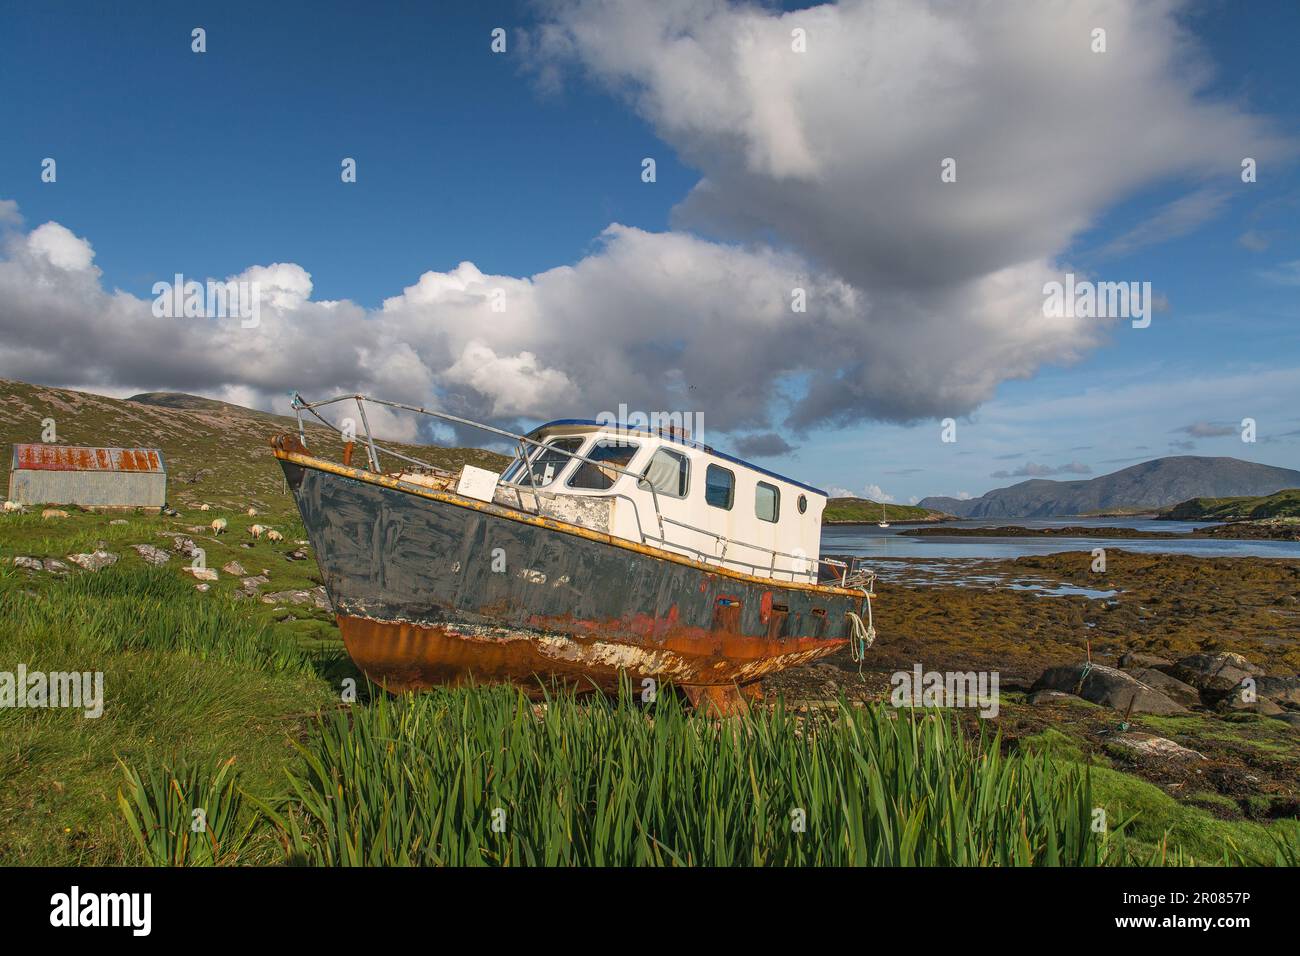 Disused Rust Eaten Boat lying in Loch Leosavay, Abhainn Suidhe, Isle of Harris, Hebrides, Outer Hebrides, Western Isles, Scotland, United Kingdom Stock Photo